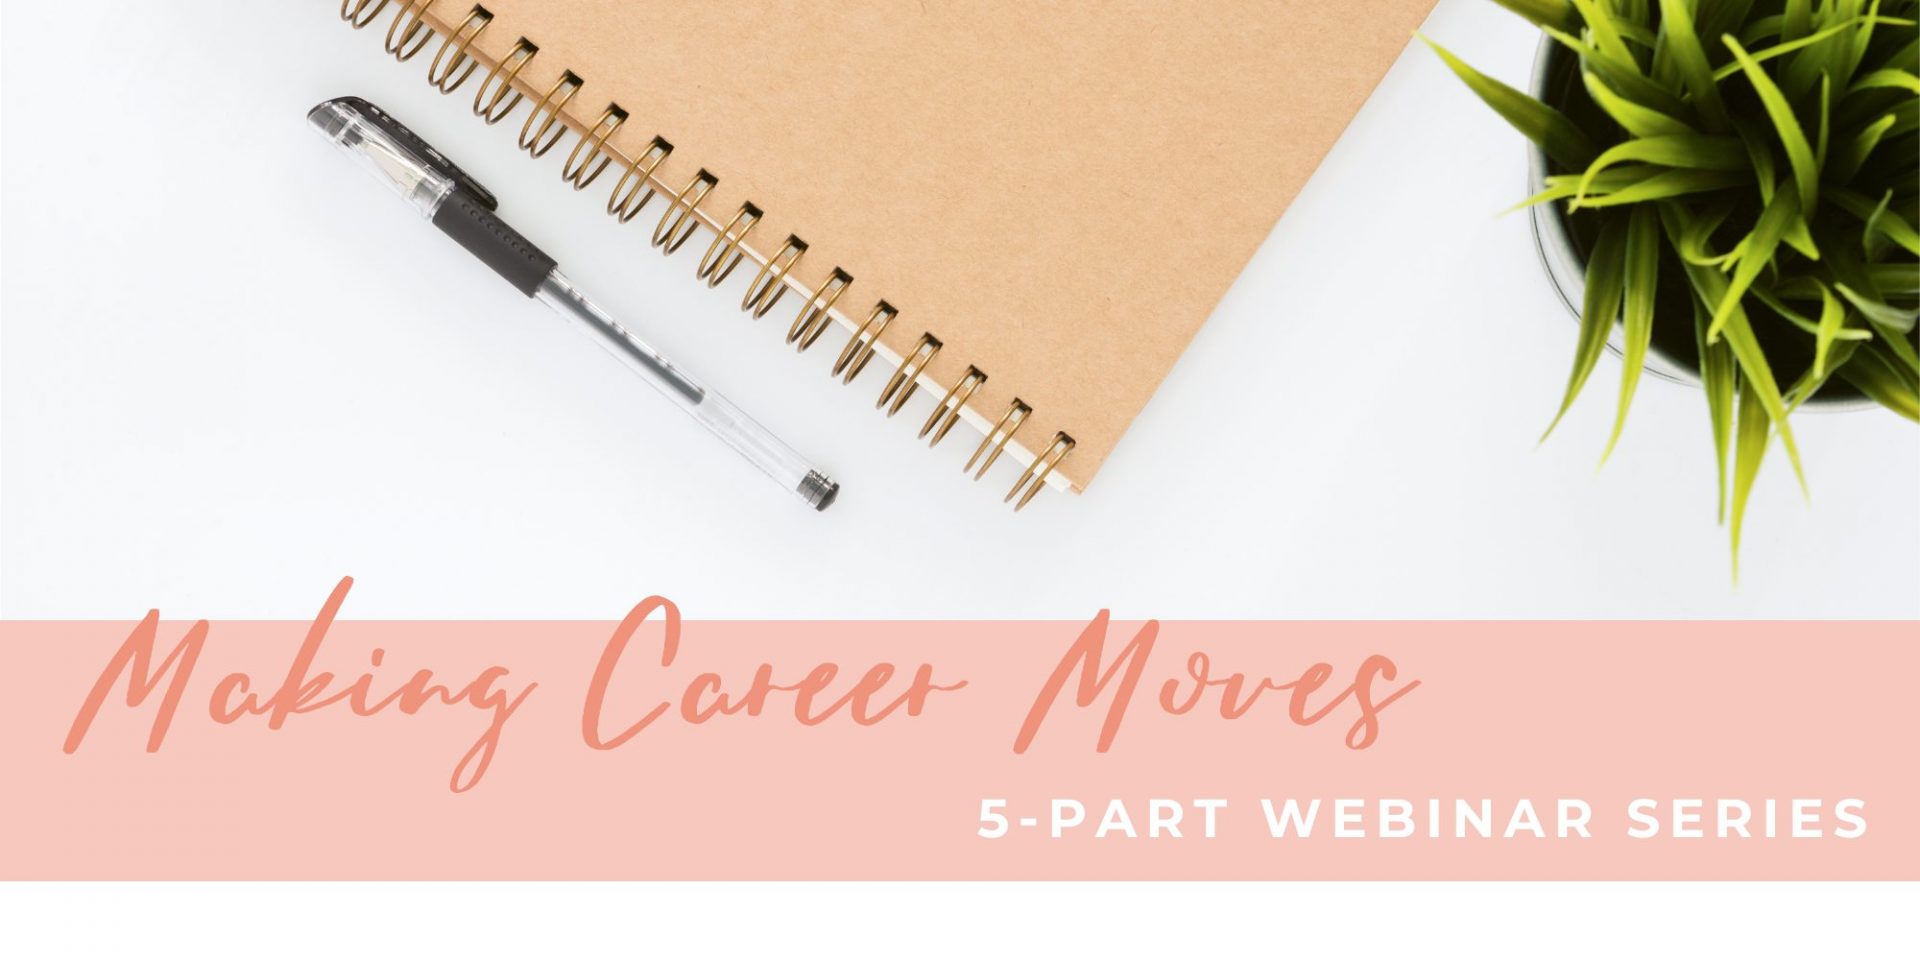 Making career moves: 5-part webinar series